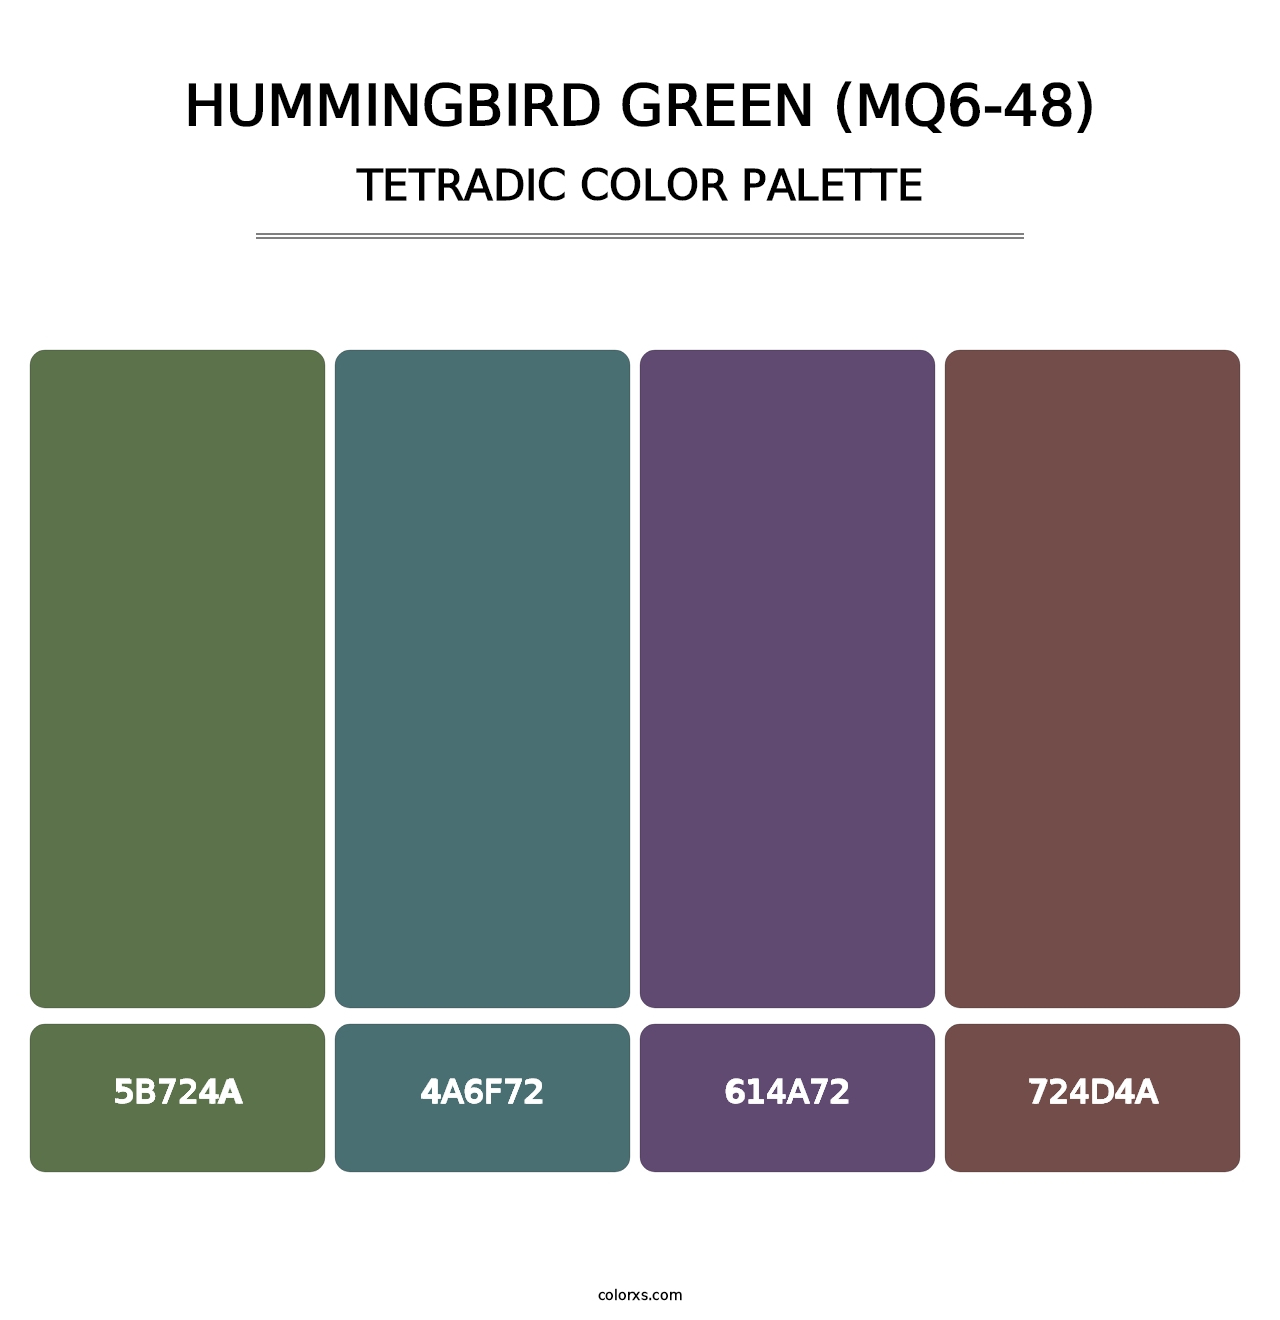 Hummingbird Green (MQ6-48) - Tetradic Color Palette